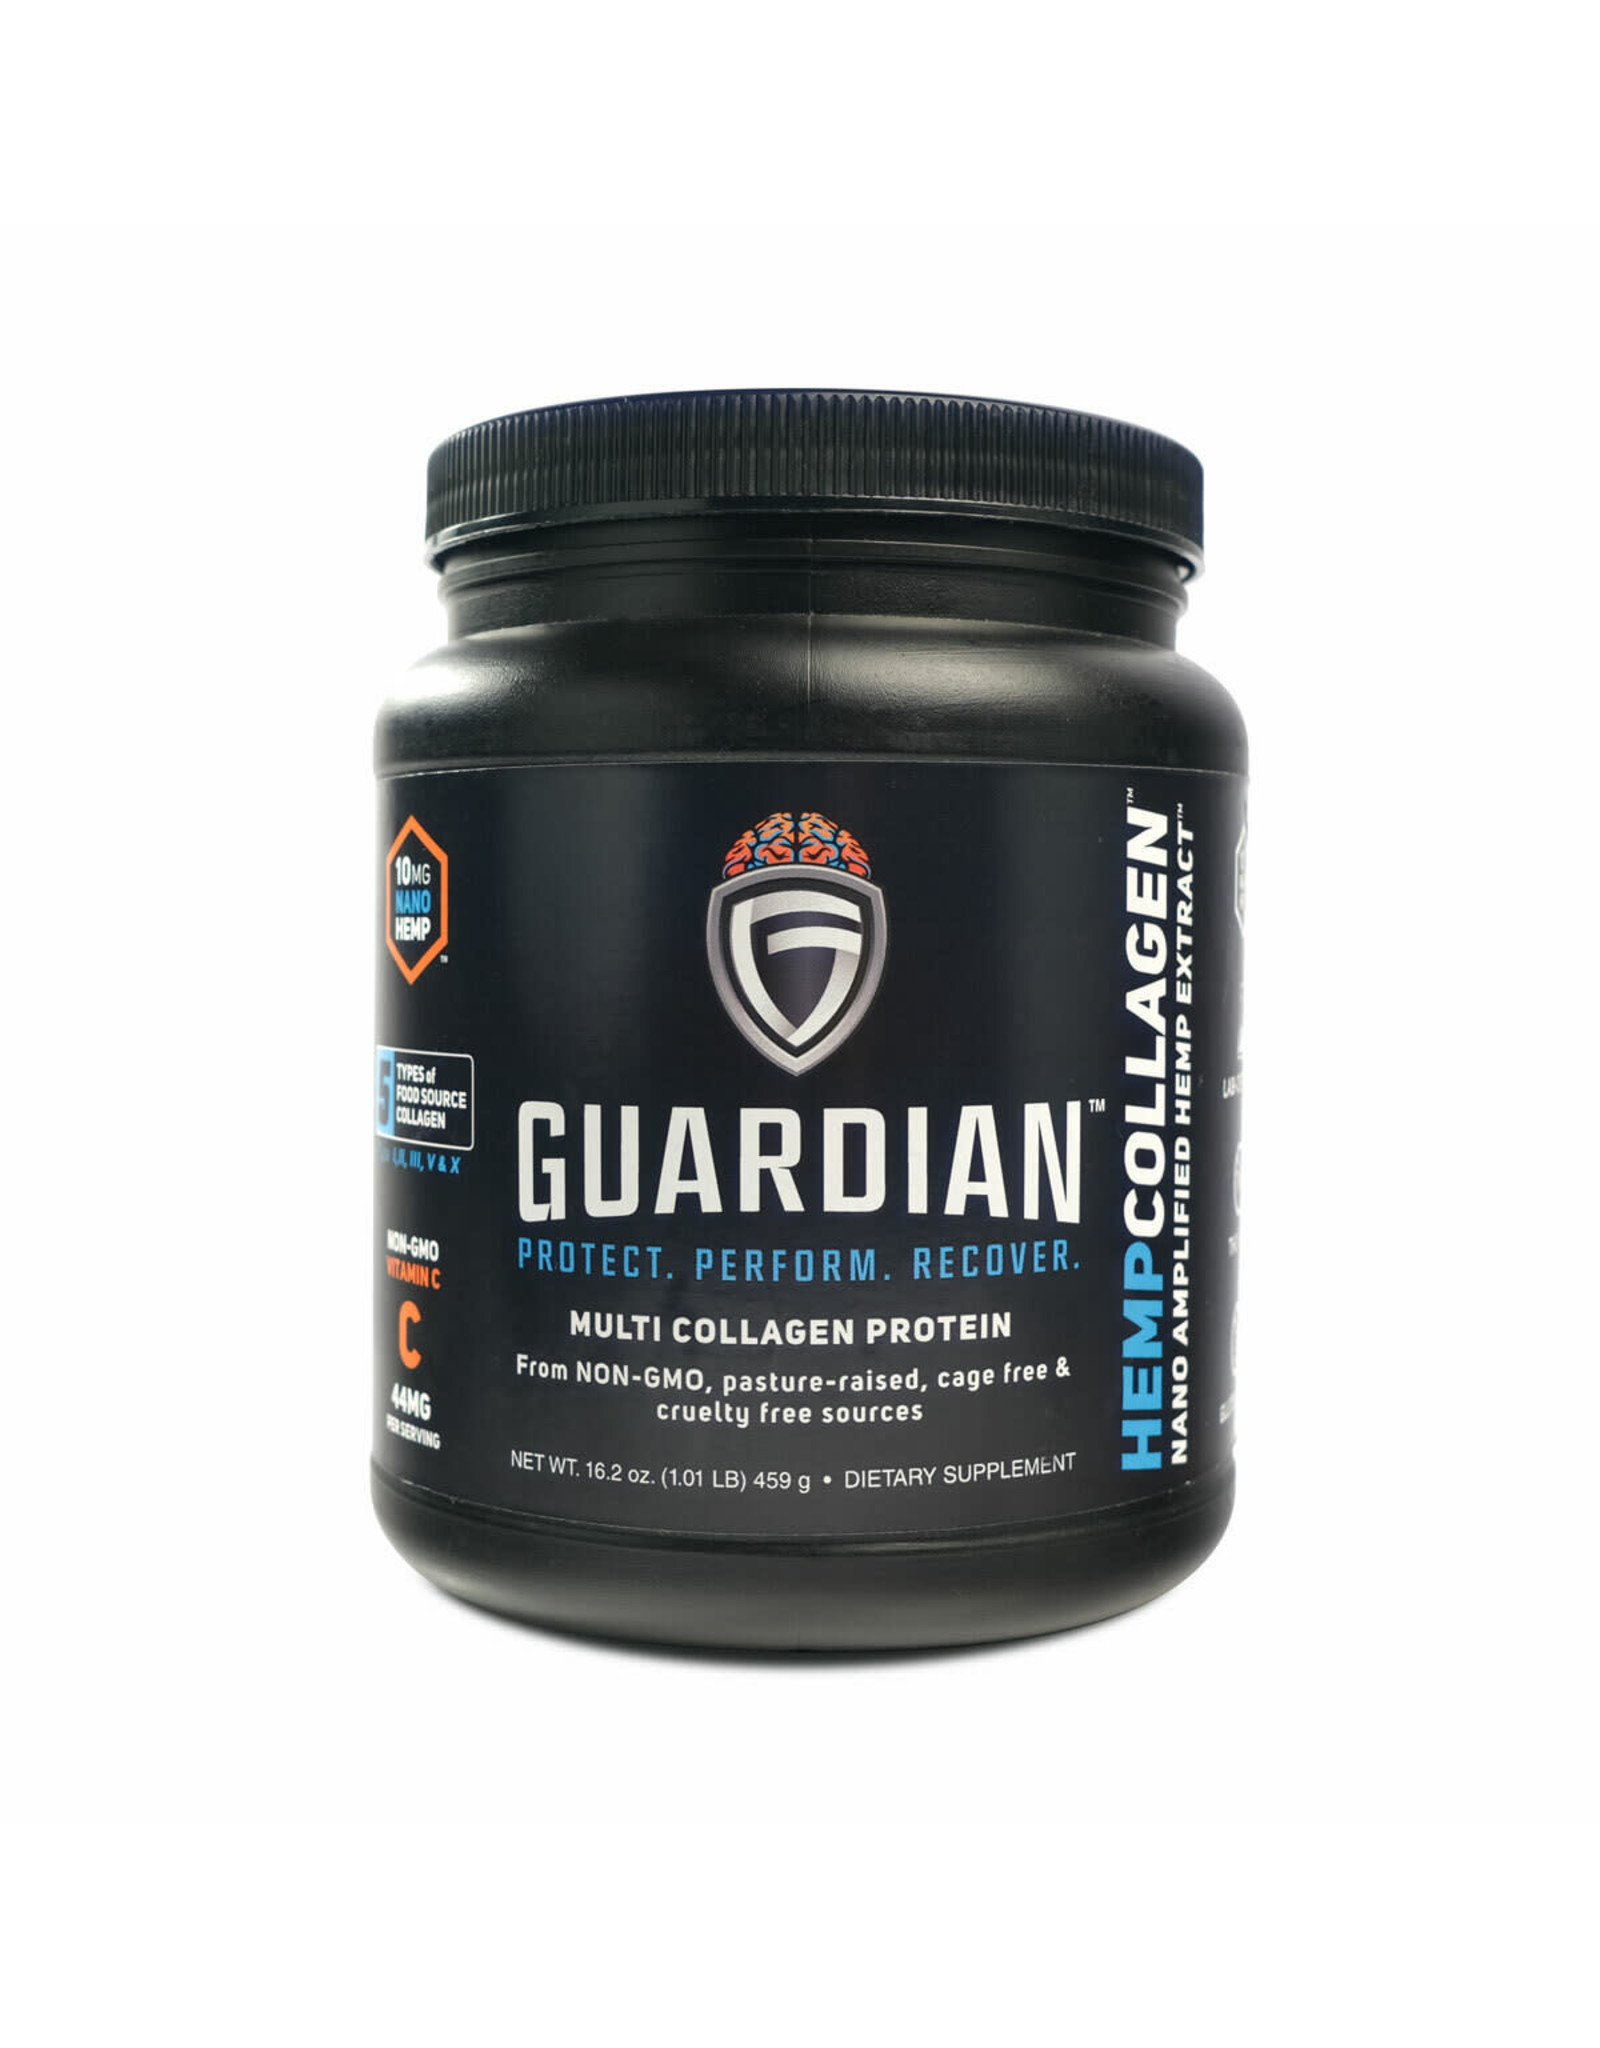 Guardian Guardian Nano Hemp Collagen Supplement Powder 450mg 16.2oz